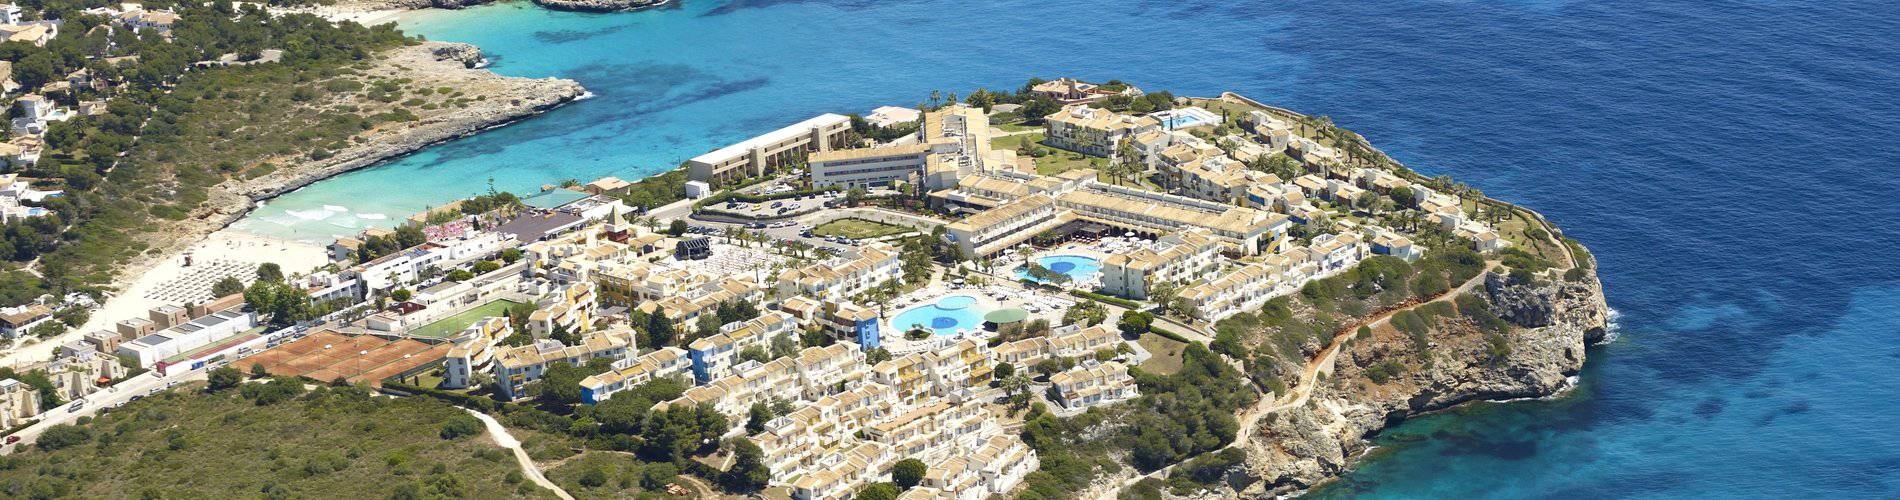 Blau hotels - Mallorca - 